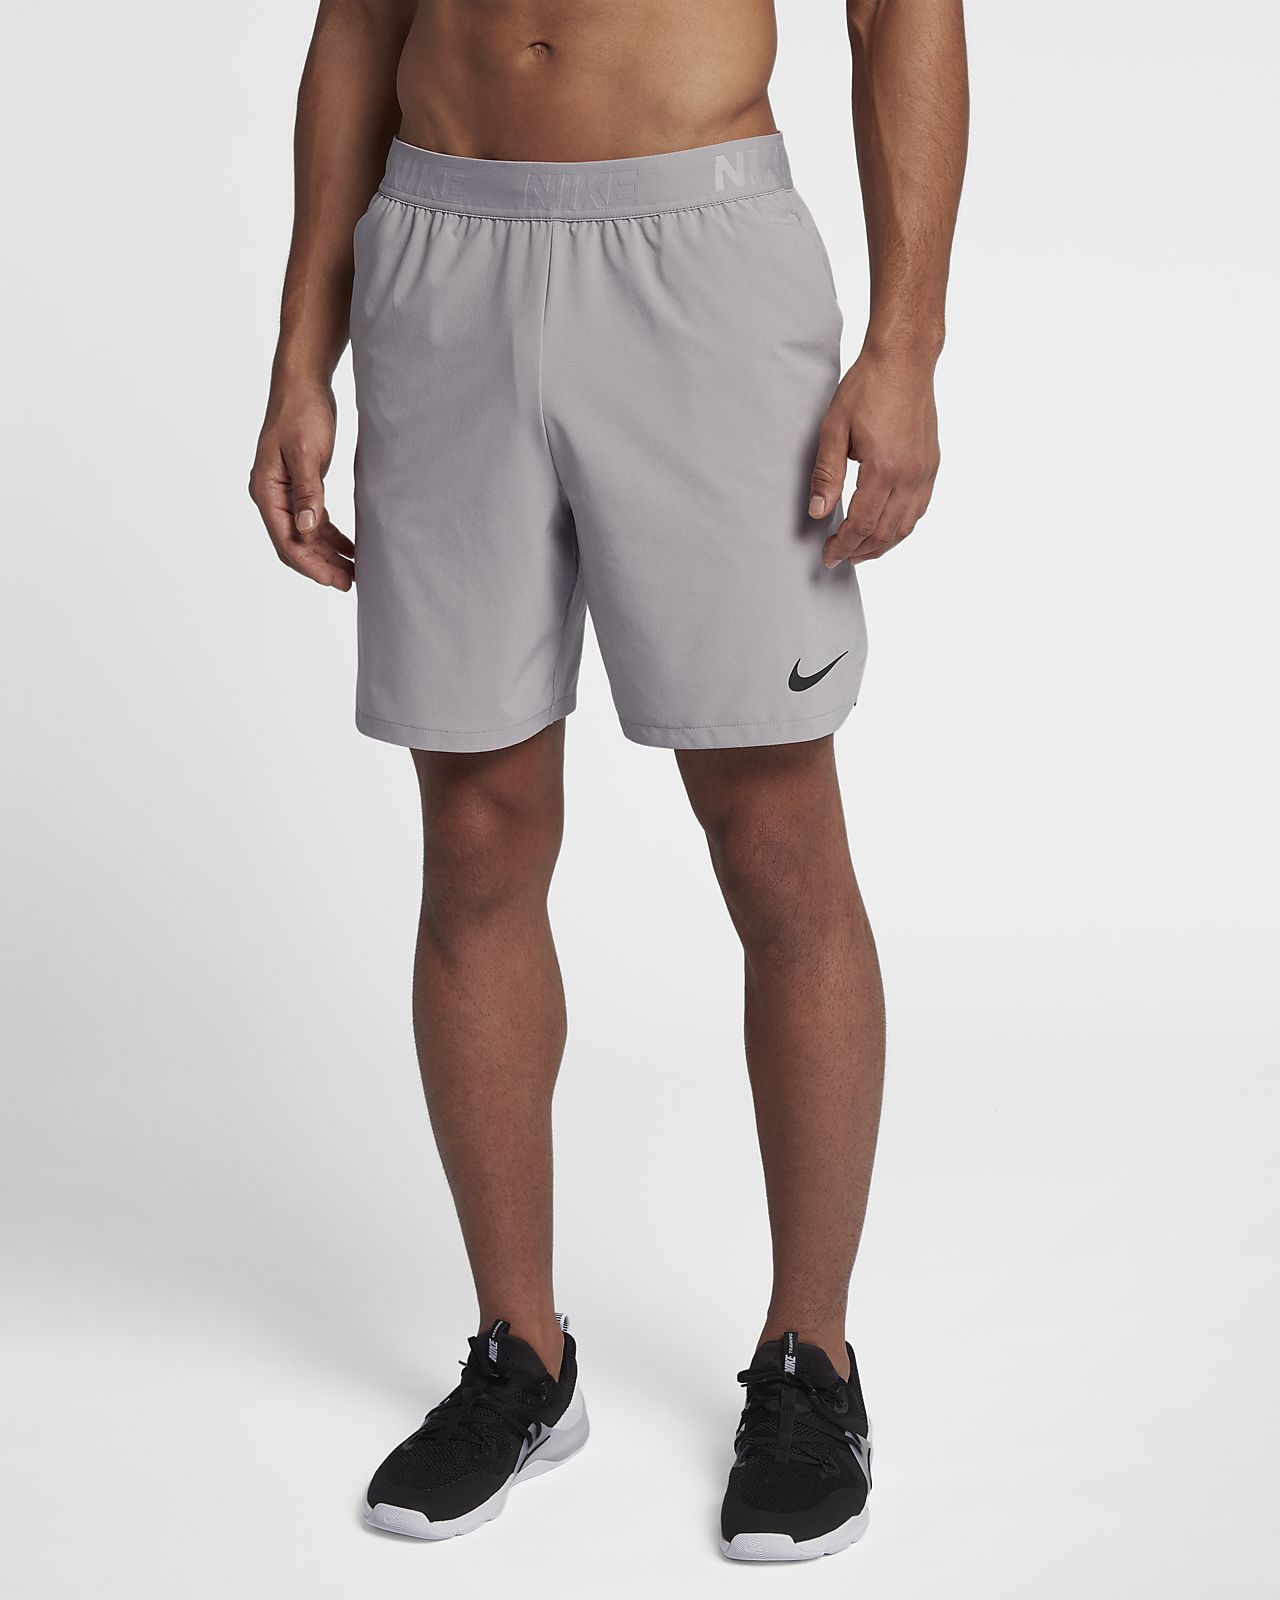 Nike Flex Training Pantaloncini Uomo luminushair.com.br